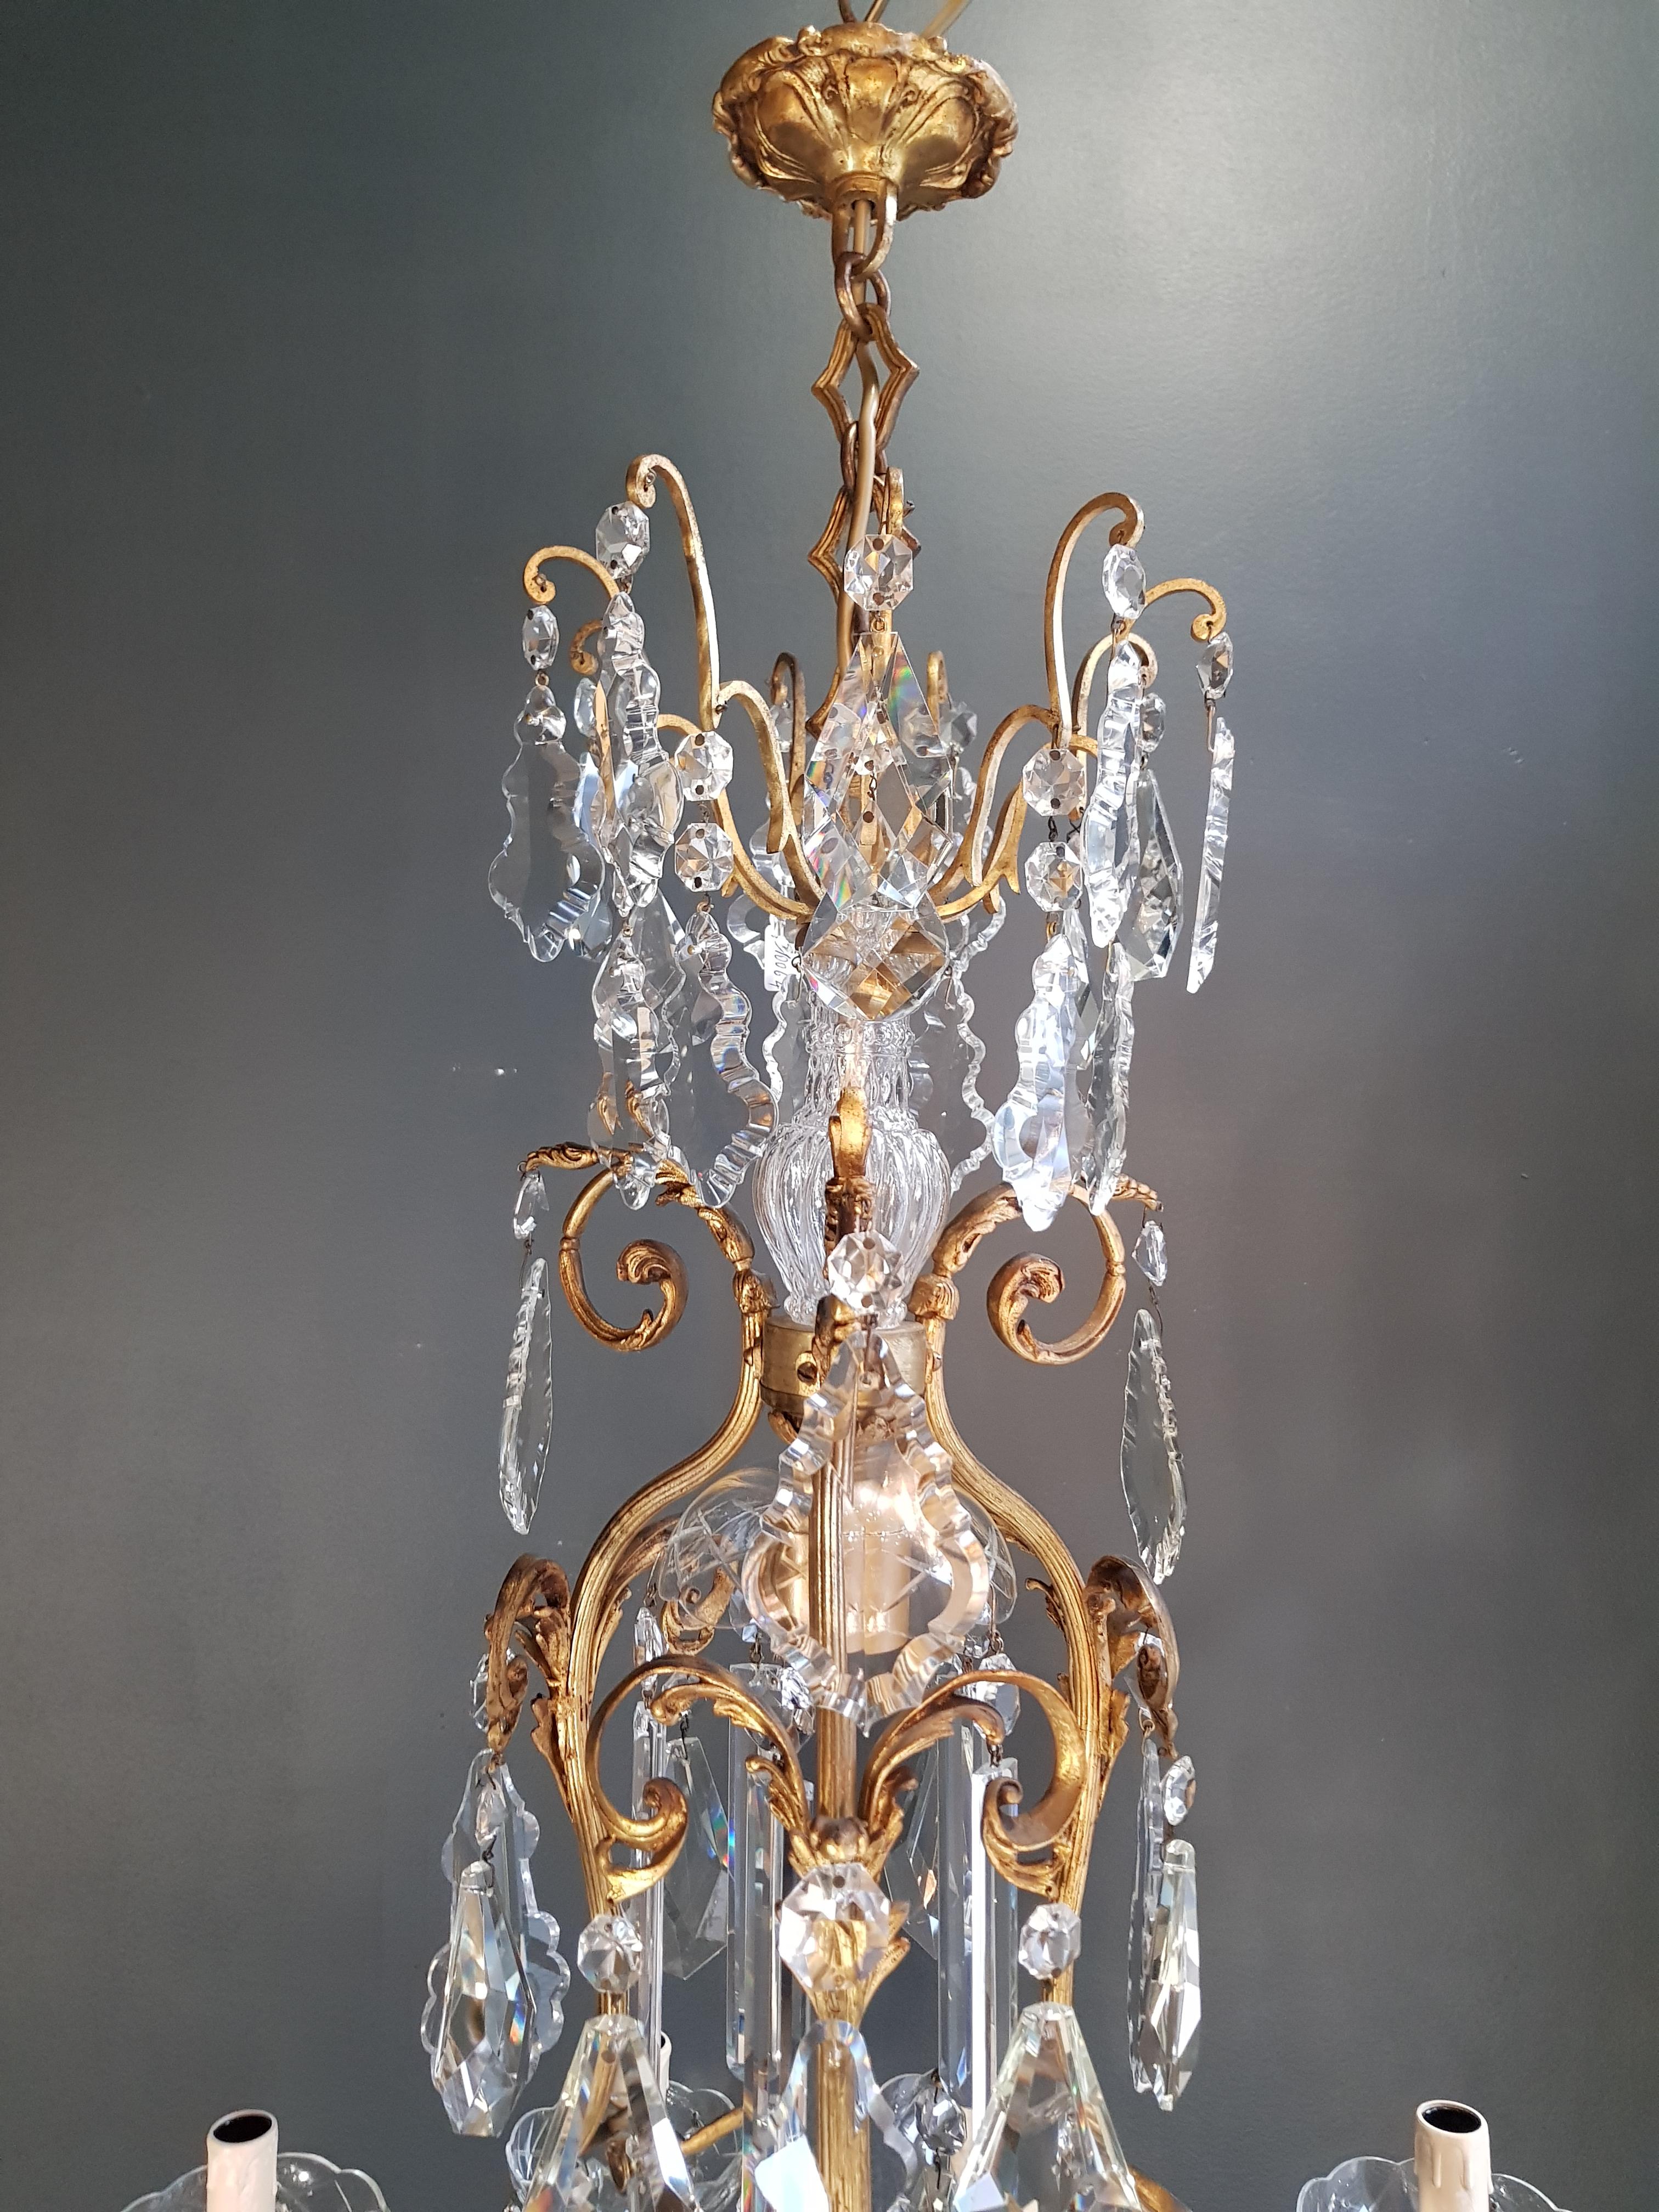 Kristall Antik Glanz Kronleuchter Lampe Kunst Nouveau Decke